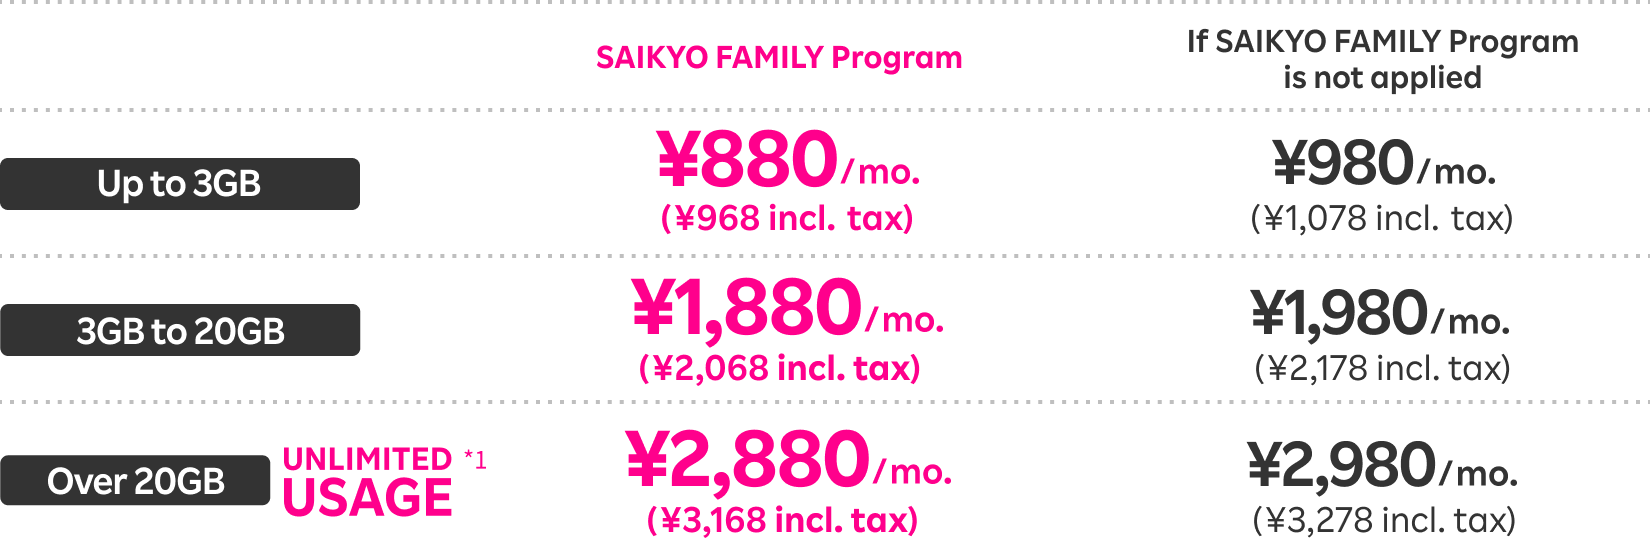 When plan fee with SAIKYO FAMILY Program applied: Enjoy a 100 yen discount (excl. tax) and pay 3,168 yen/mo. (incl. tax) for unlimited data, or 2,068 yen/mo. (incl. tax) for 3GB to more than 20GB, or 968 yen (incl. tax) for up to 3GB.